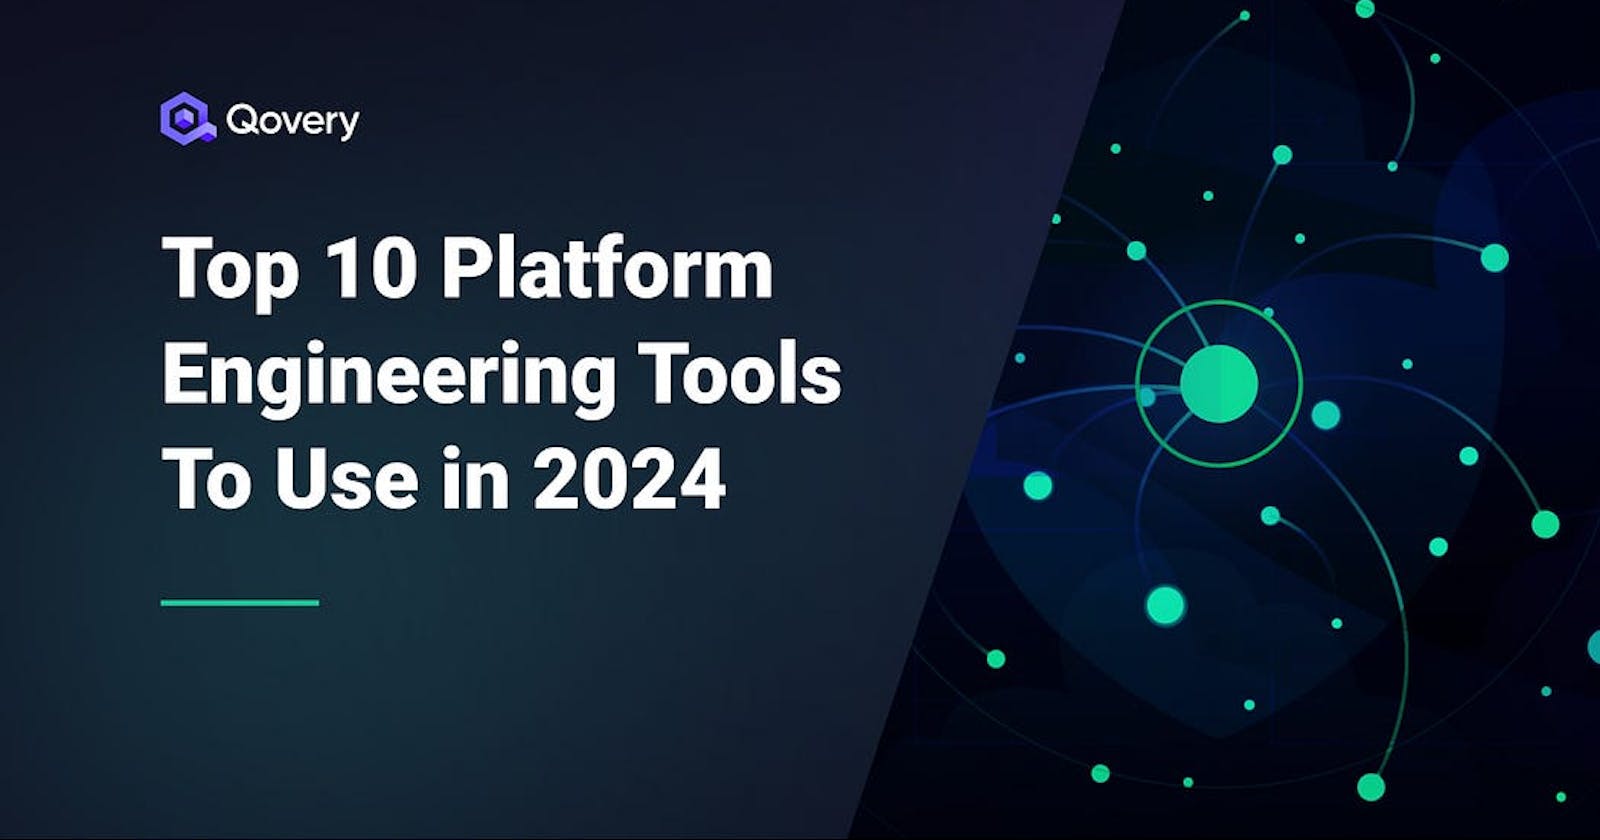 Top 10 Platform Engineering Tools You Should Consider in 2024